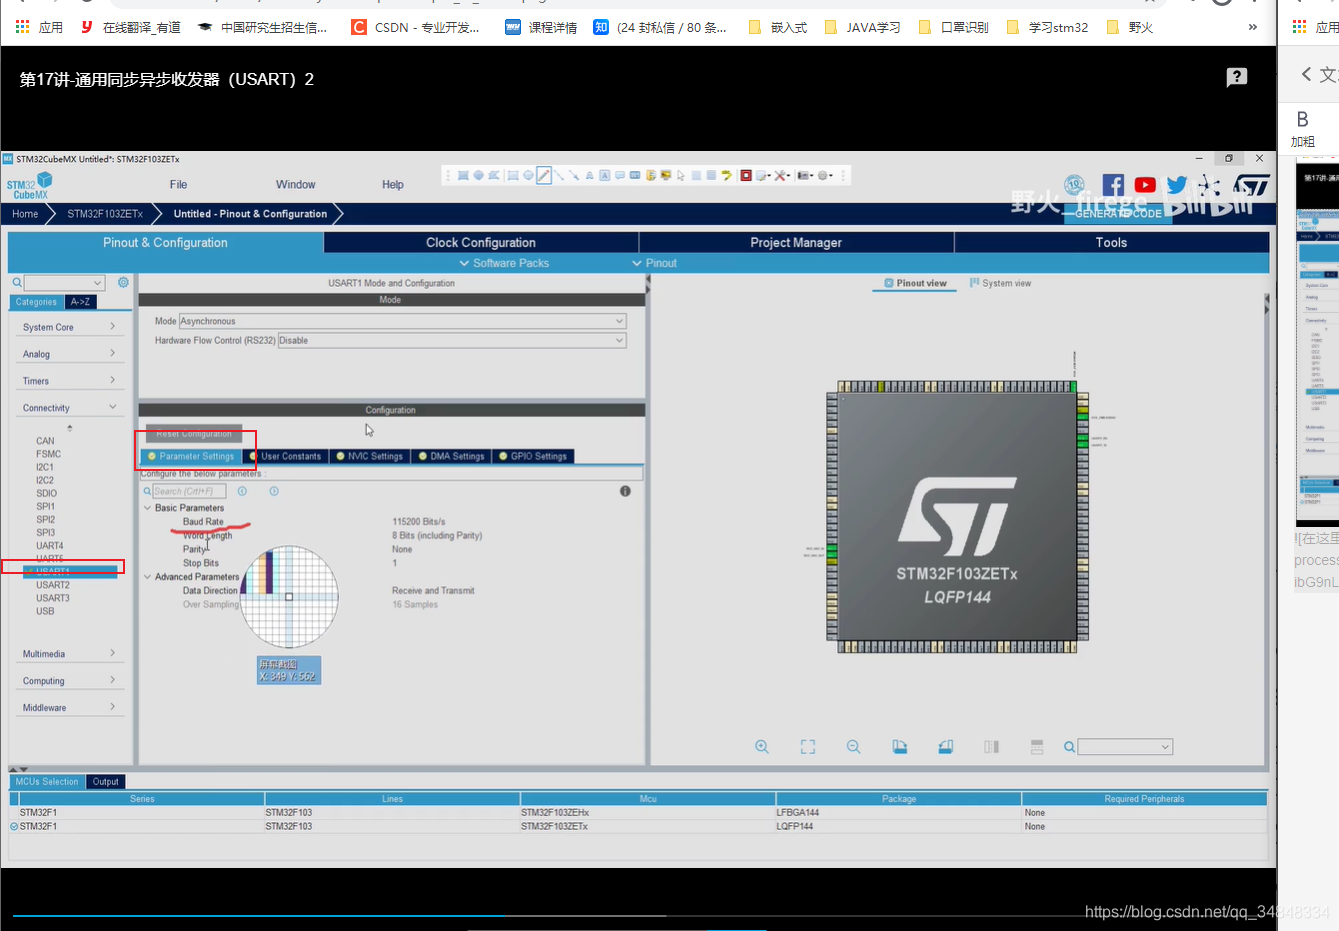 STM32F103_study33 CUBEMX Create a serial portUSART